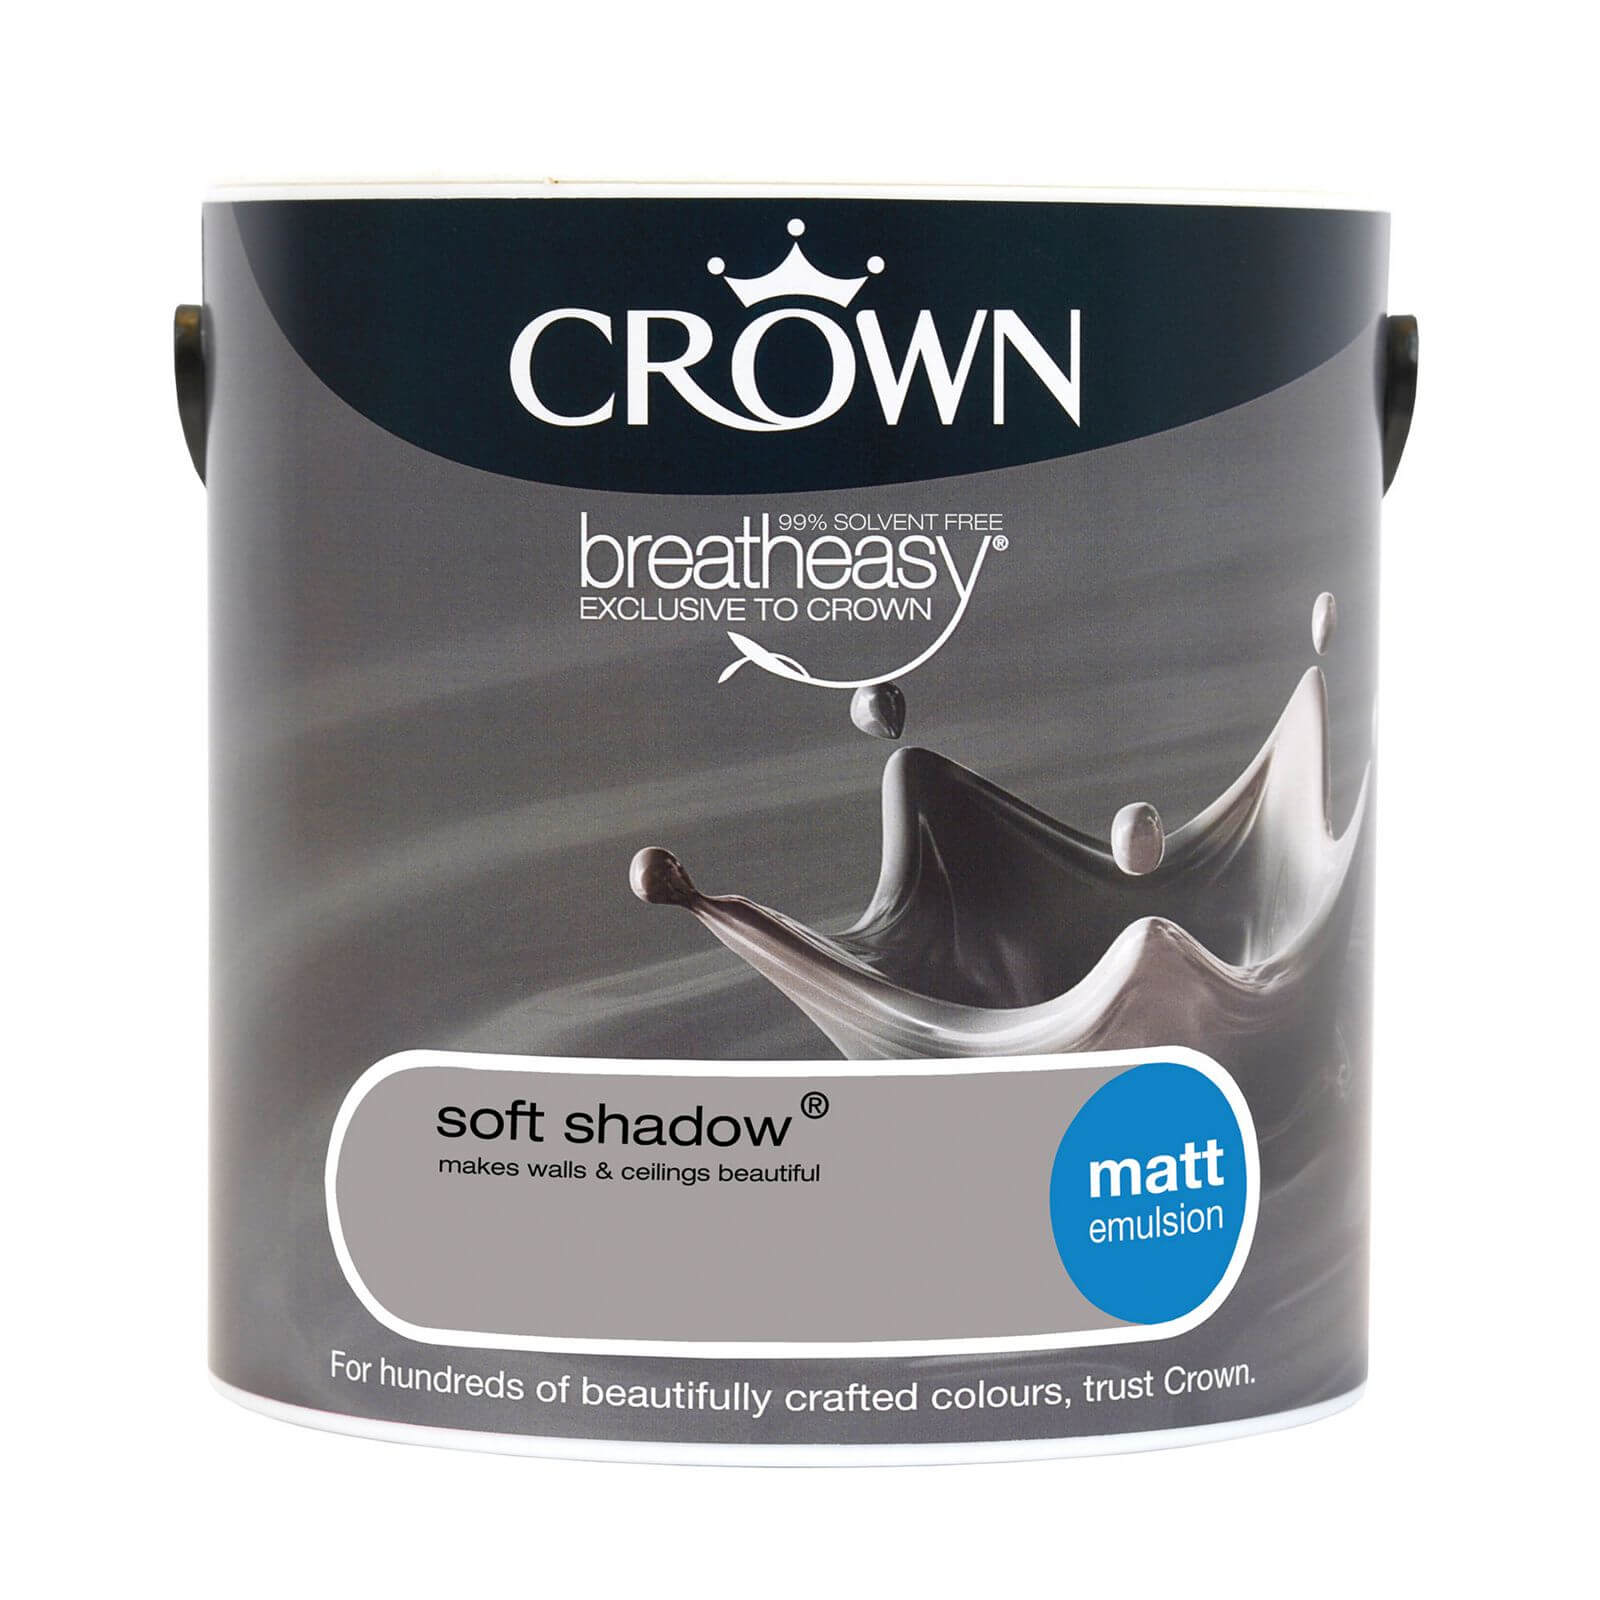 Crown Breatheasy Soft Shadow - Standard Emulsion Matt Paint - 2.5L